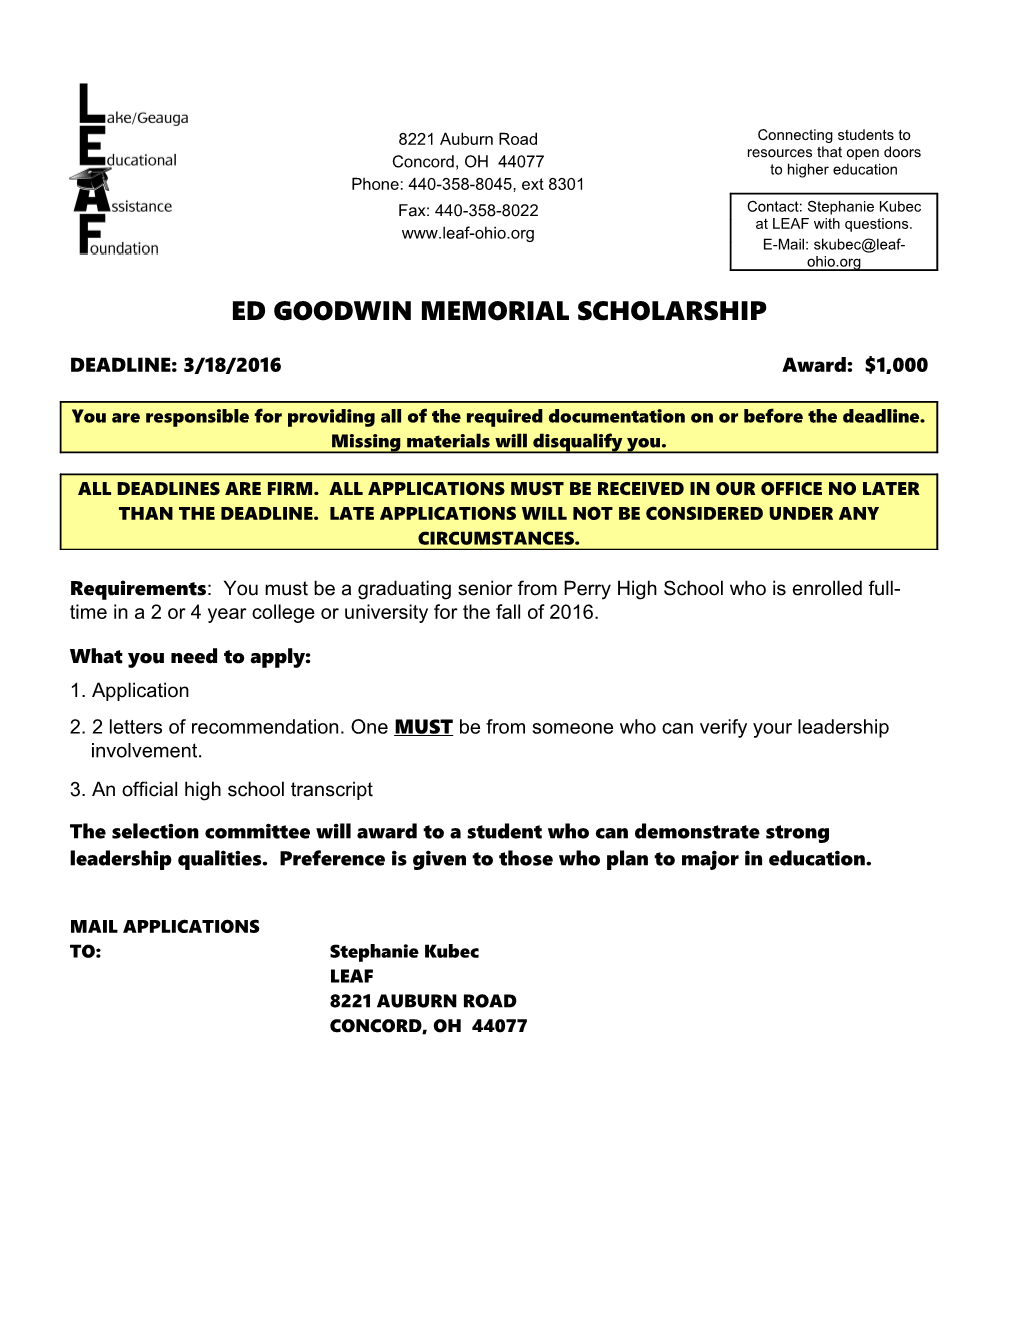 Ed Goodwin Memorial Scholarship